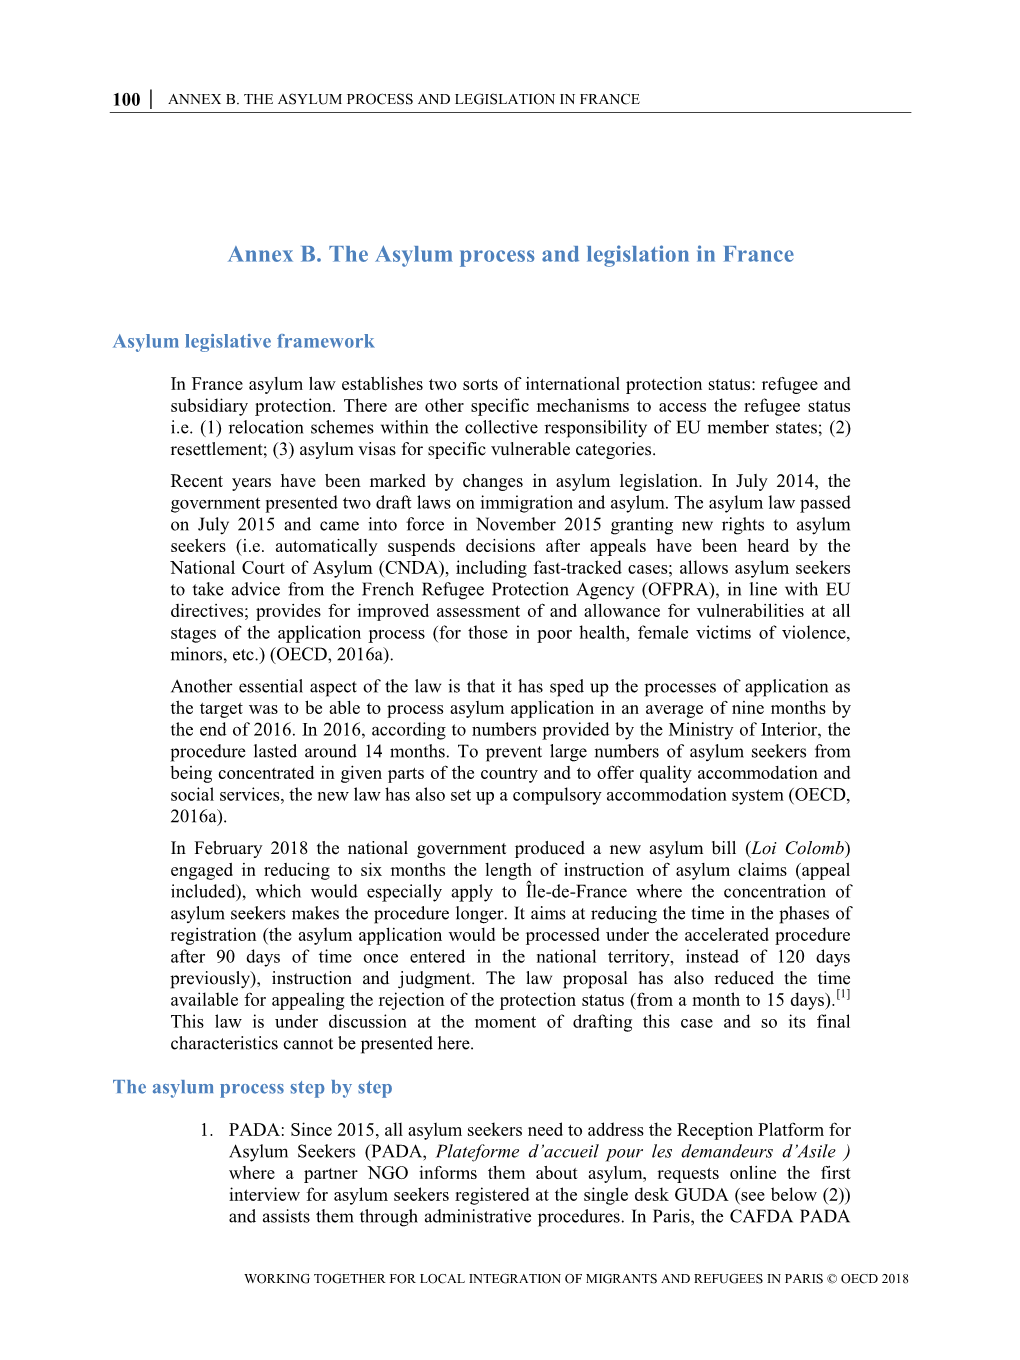 The Asylum Process and Legislation in France Annex B